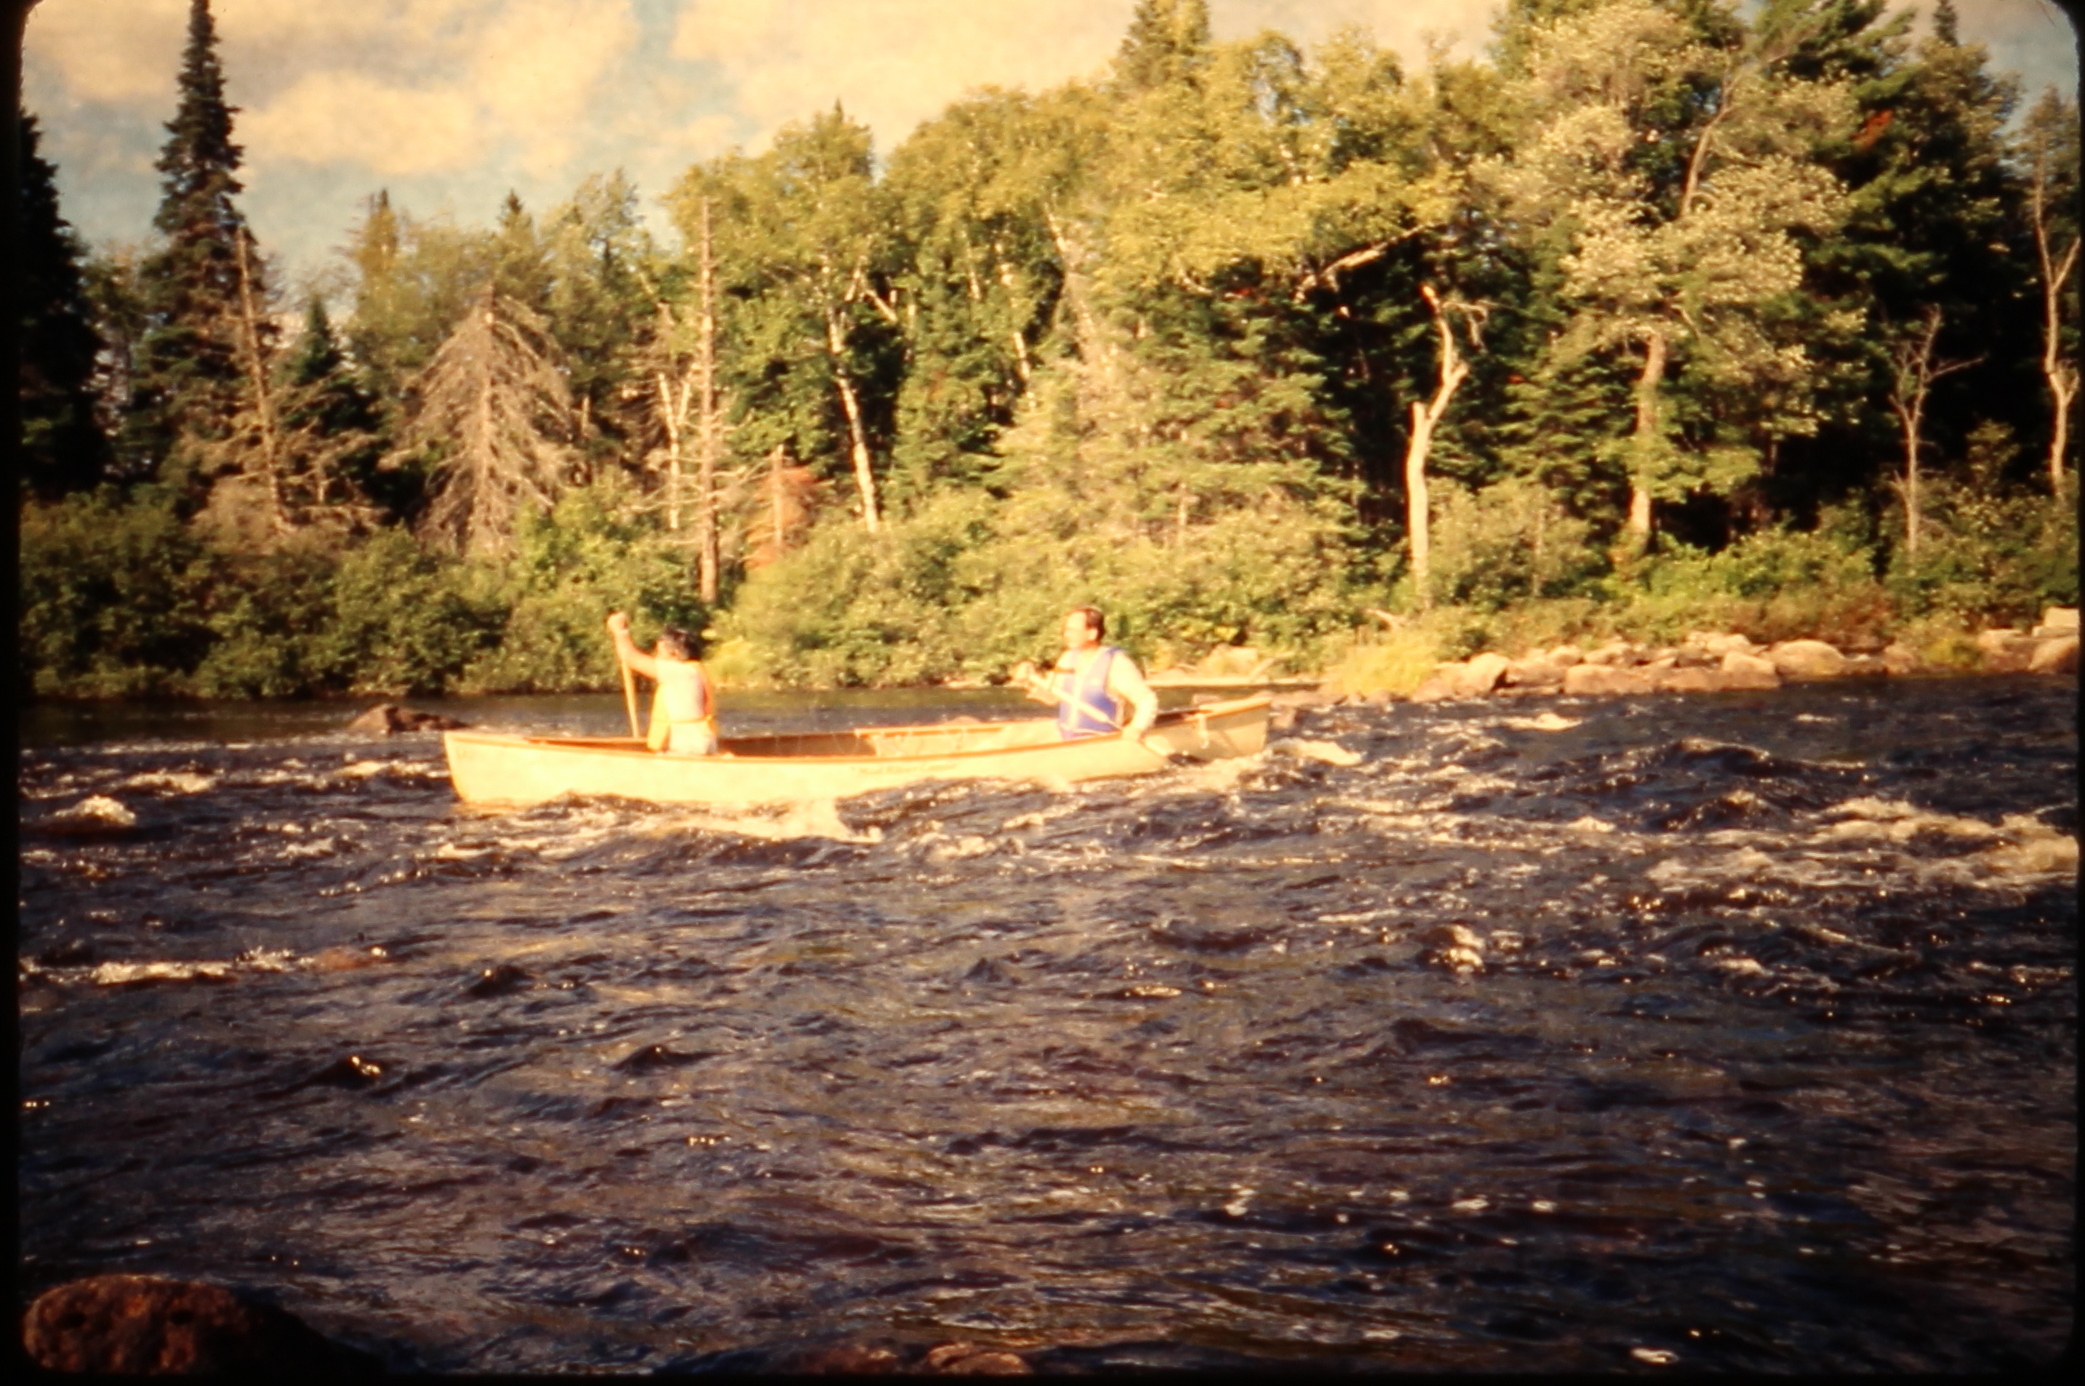 19890903.09 - USA ME -- MooseRiver - Somesh Jerry - Moose River Rapids 2 - MB01T01B11S09.JPG